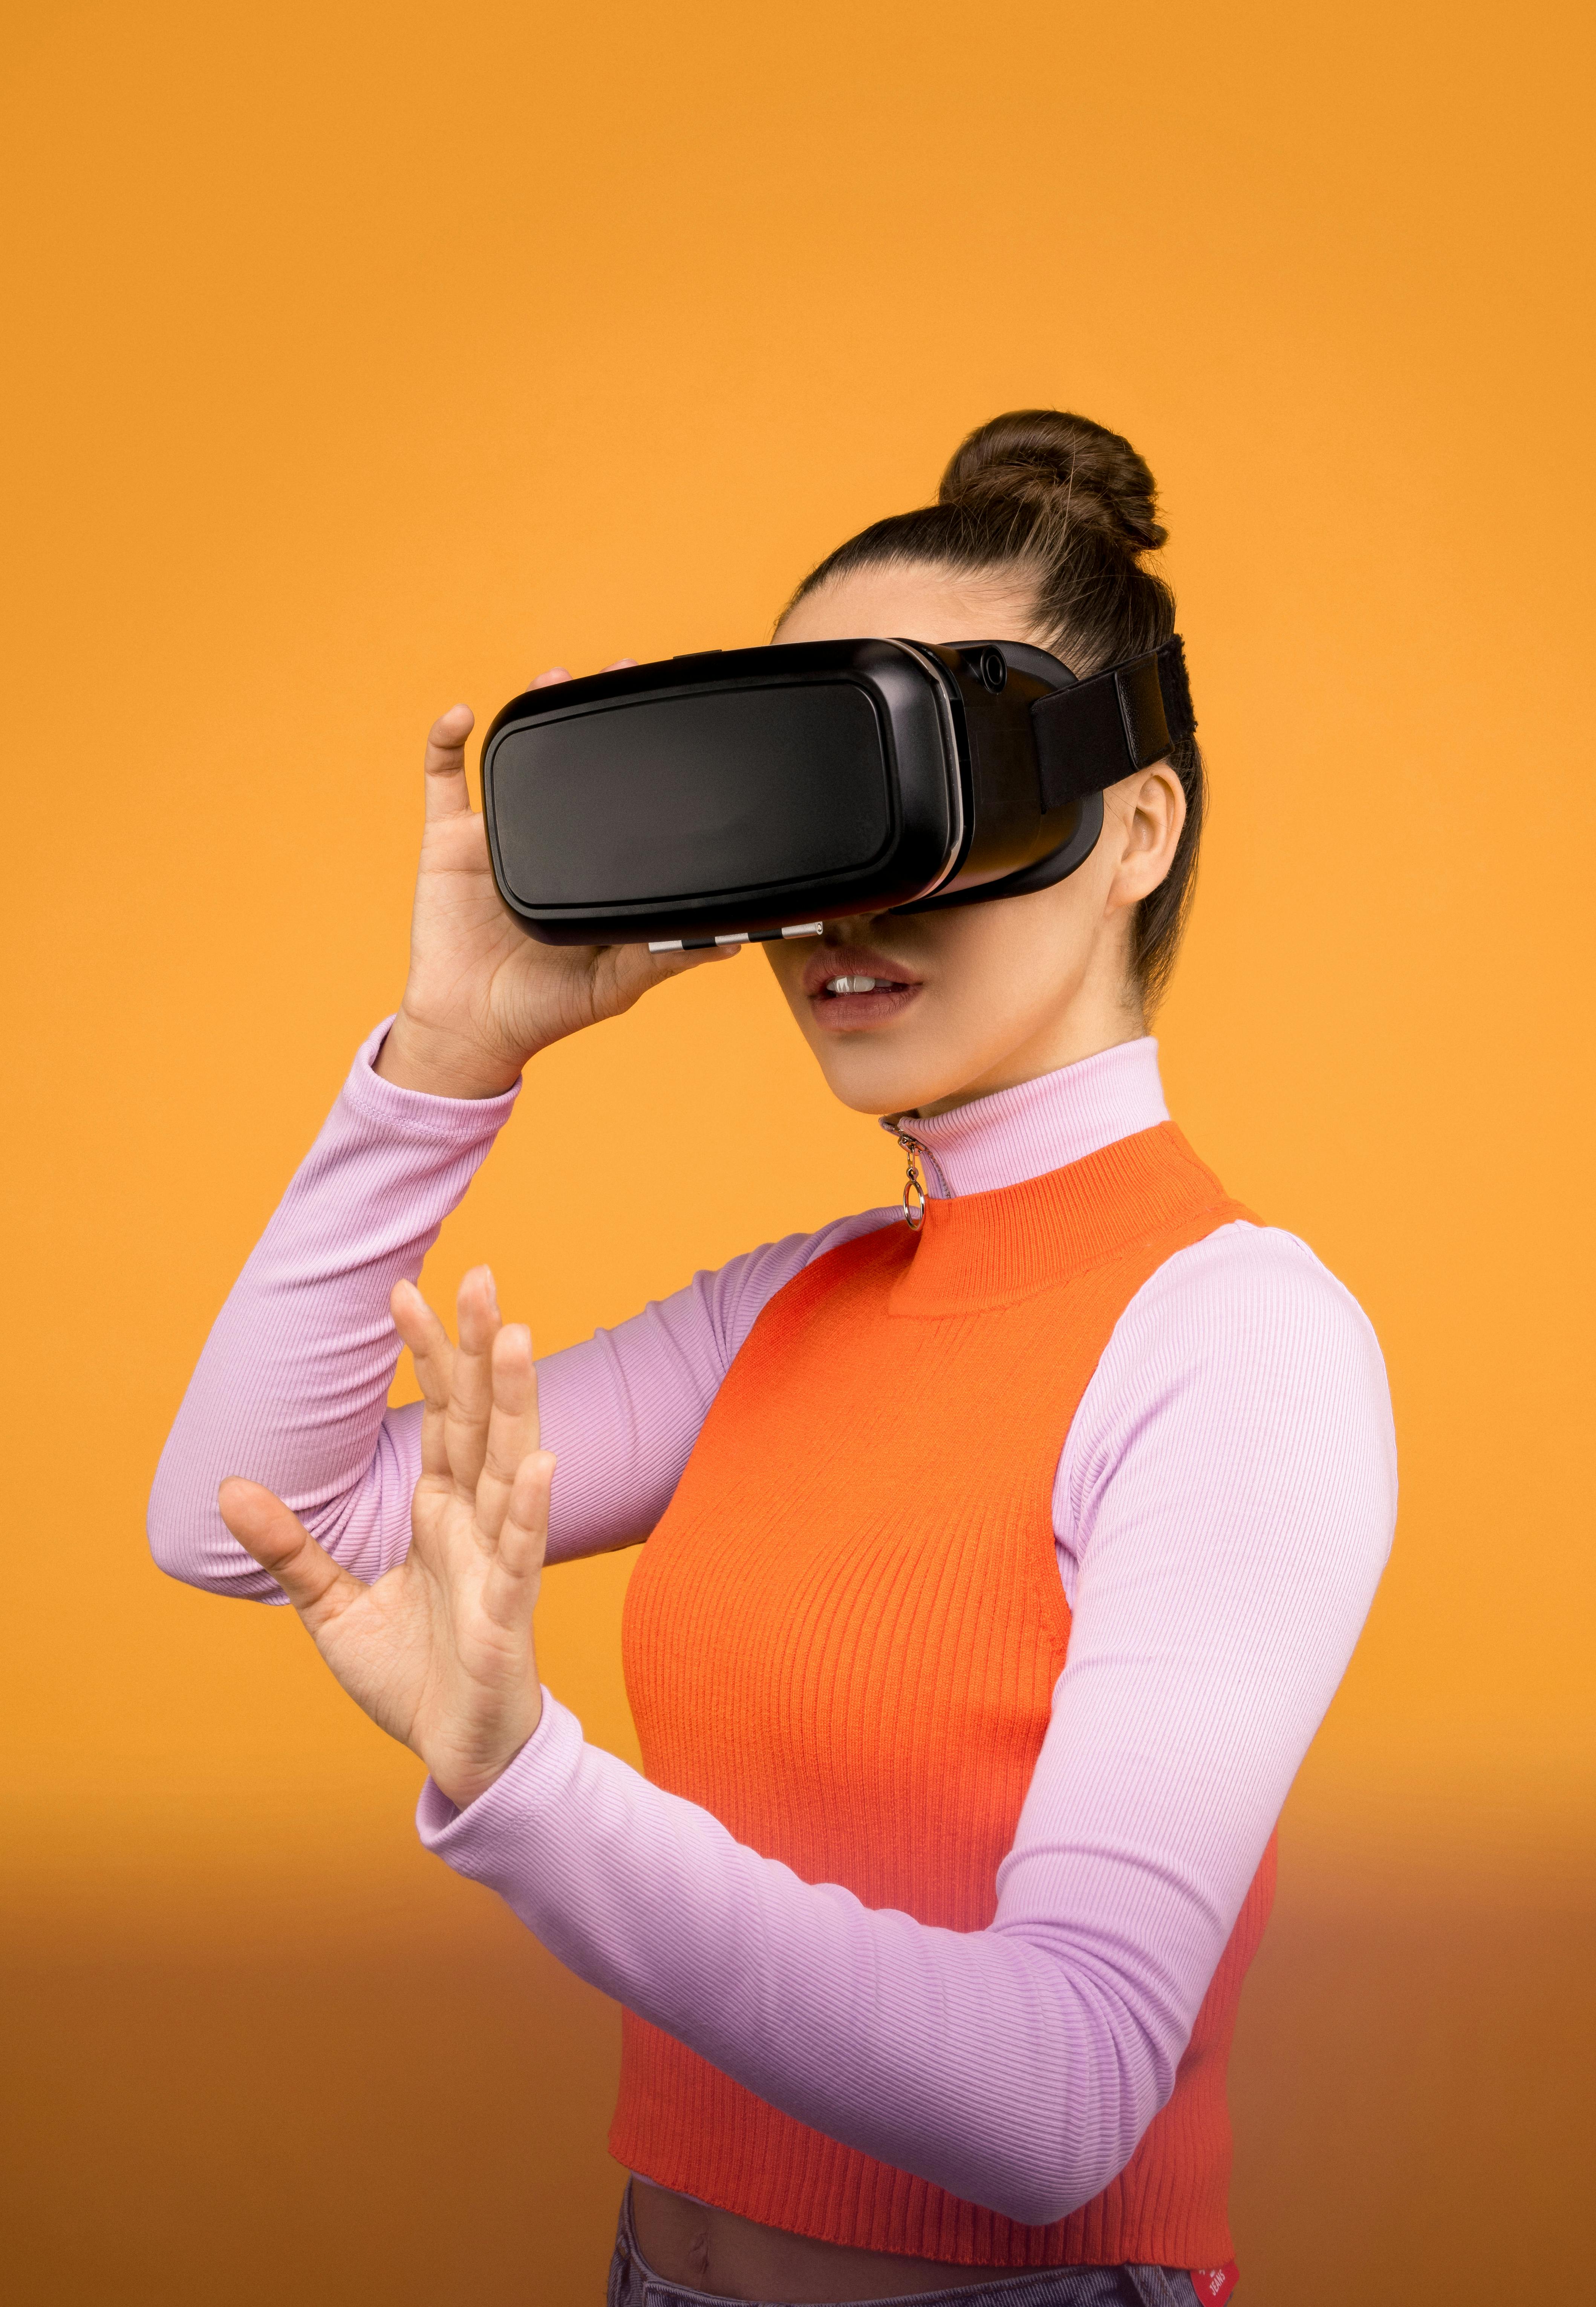 How far away is full immersion VR?